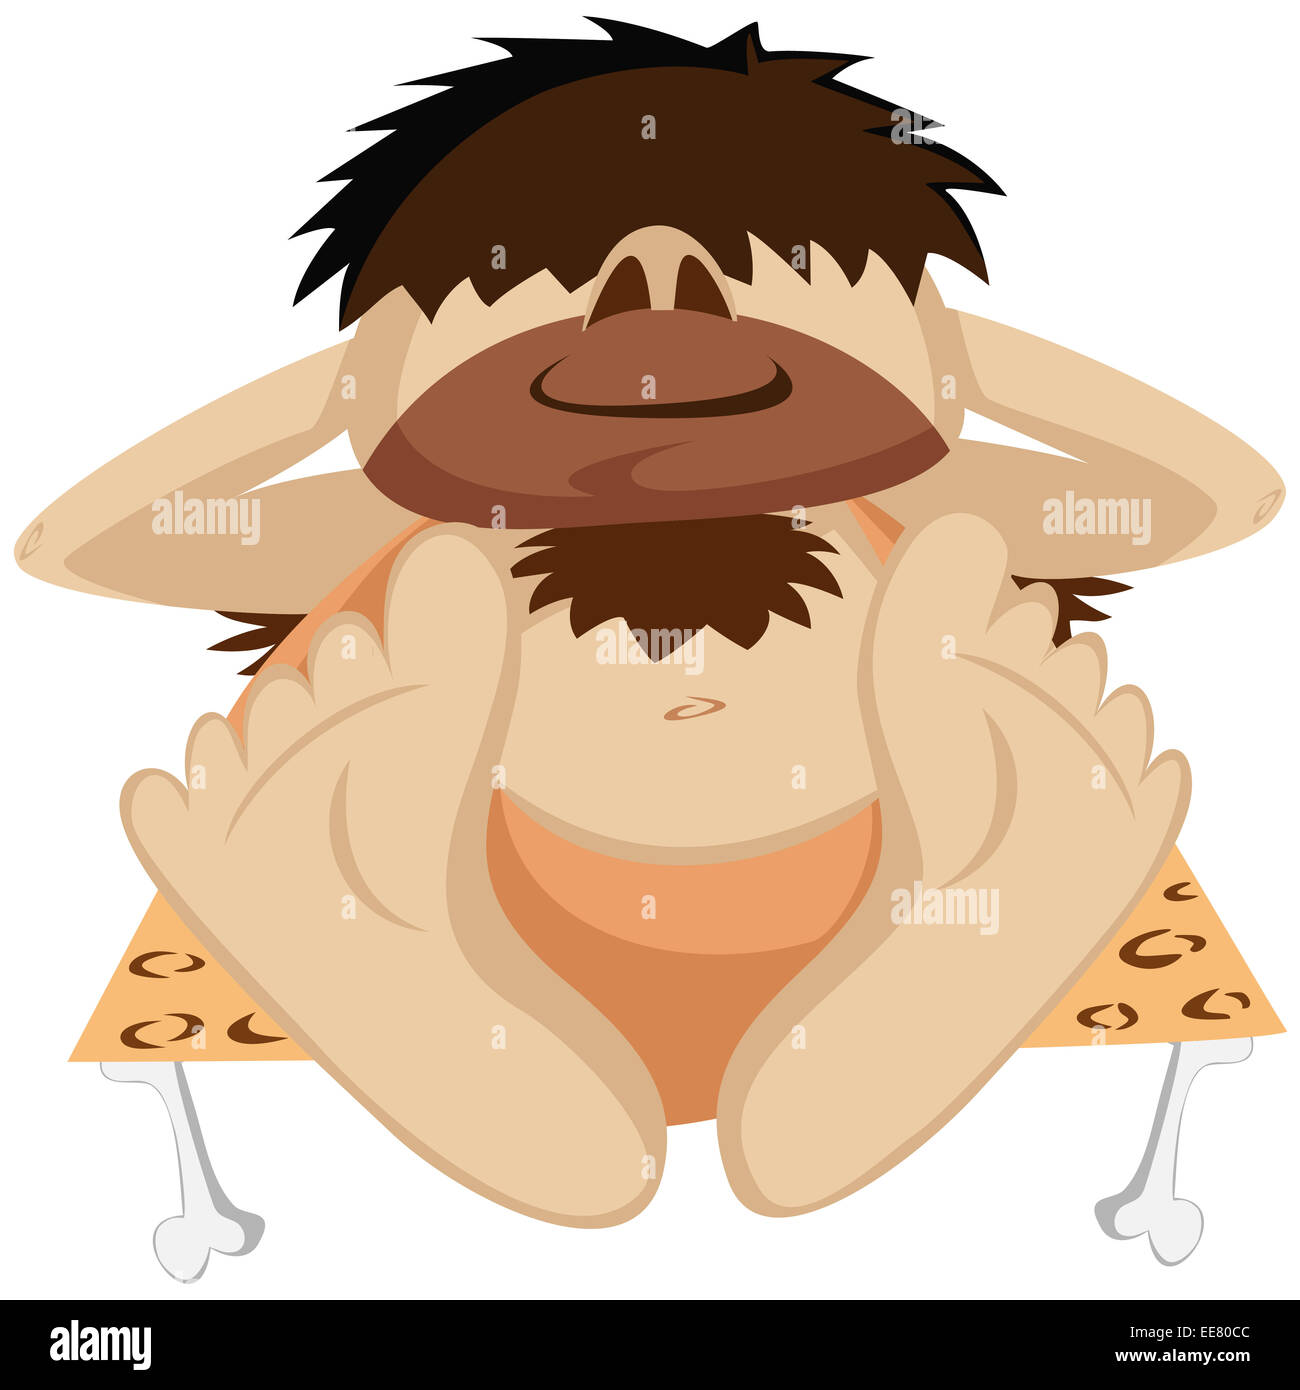 Paleo summer - Funny lazy prehistoric caveman illustration (lying